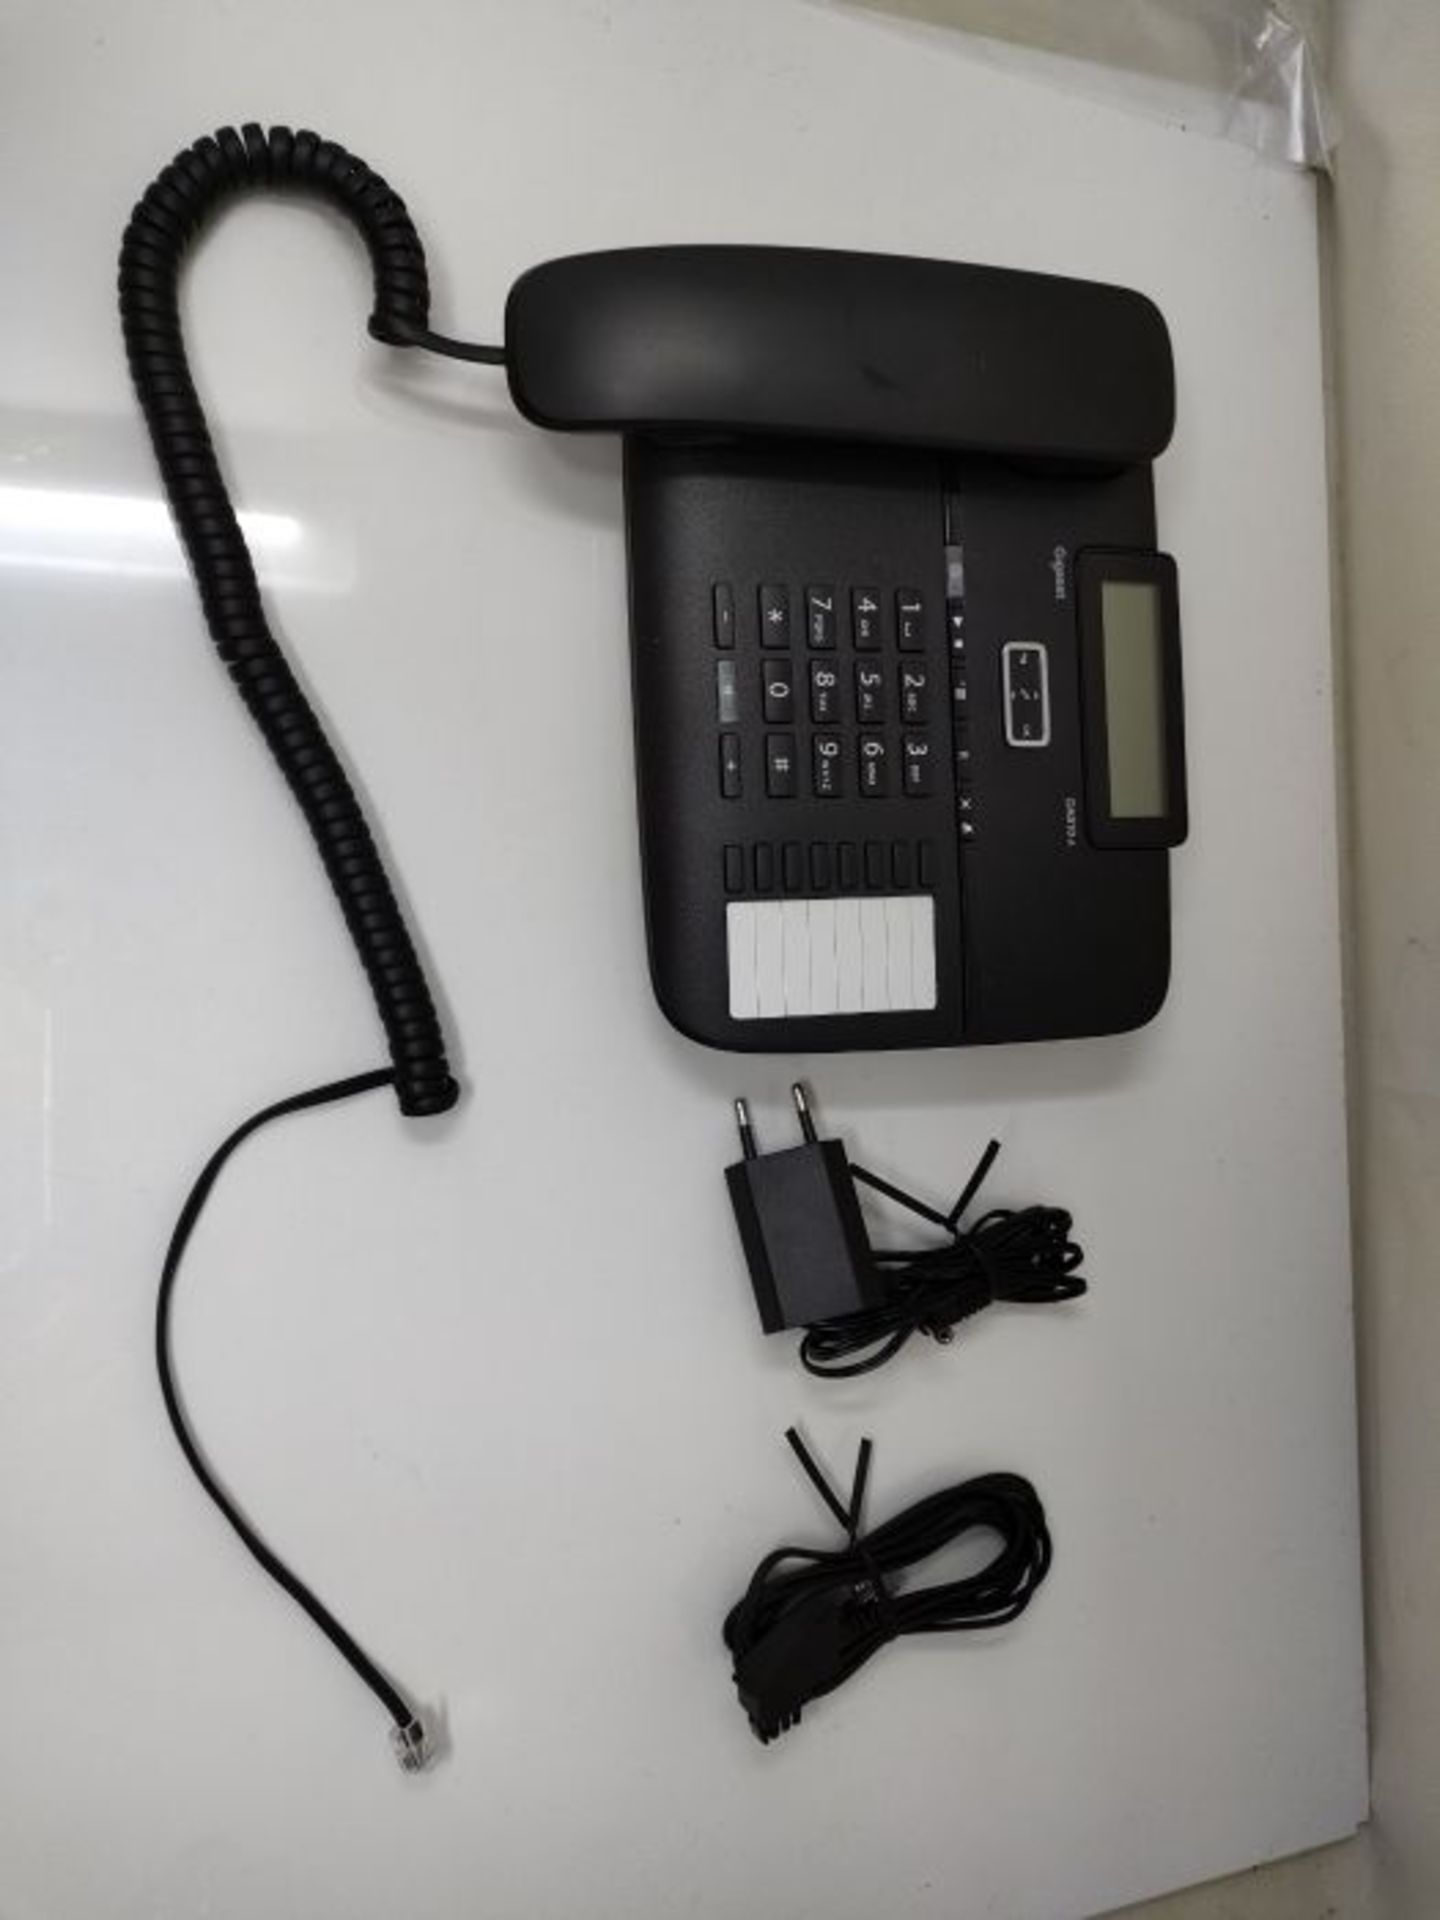 Gigaset DA810A Corded Telephone - Black - Image 3 of 3